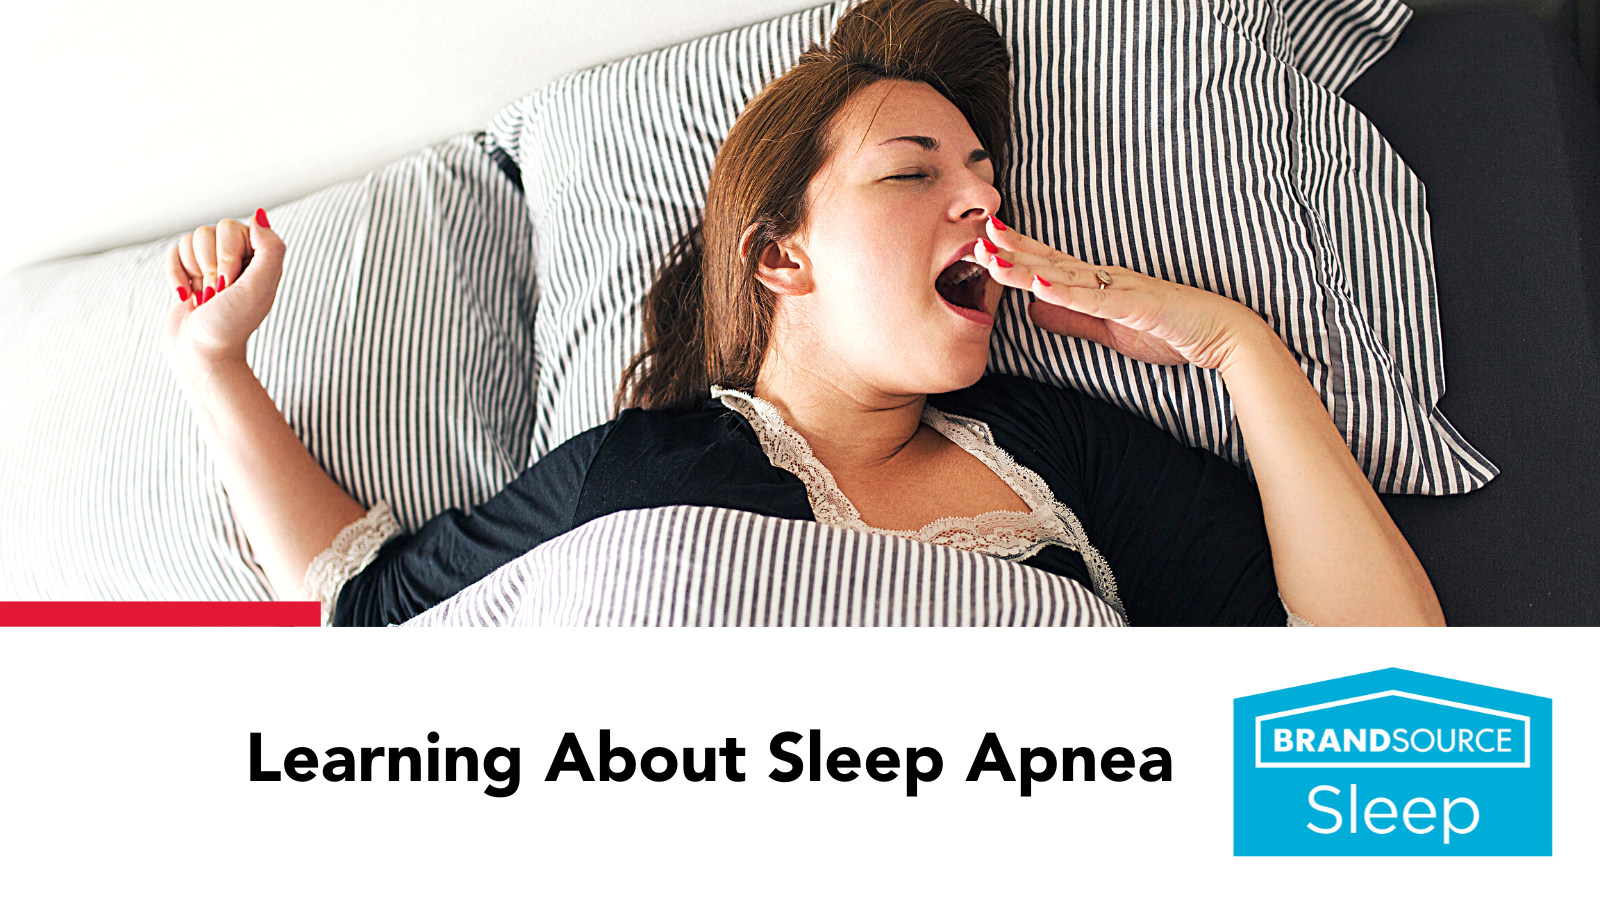 Learning About Sleep Apnea - BrandSource Sleep article - February 2023 POWER Newsletter